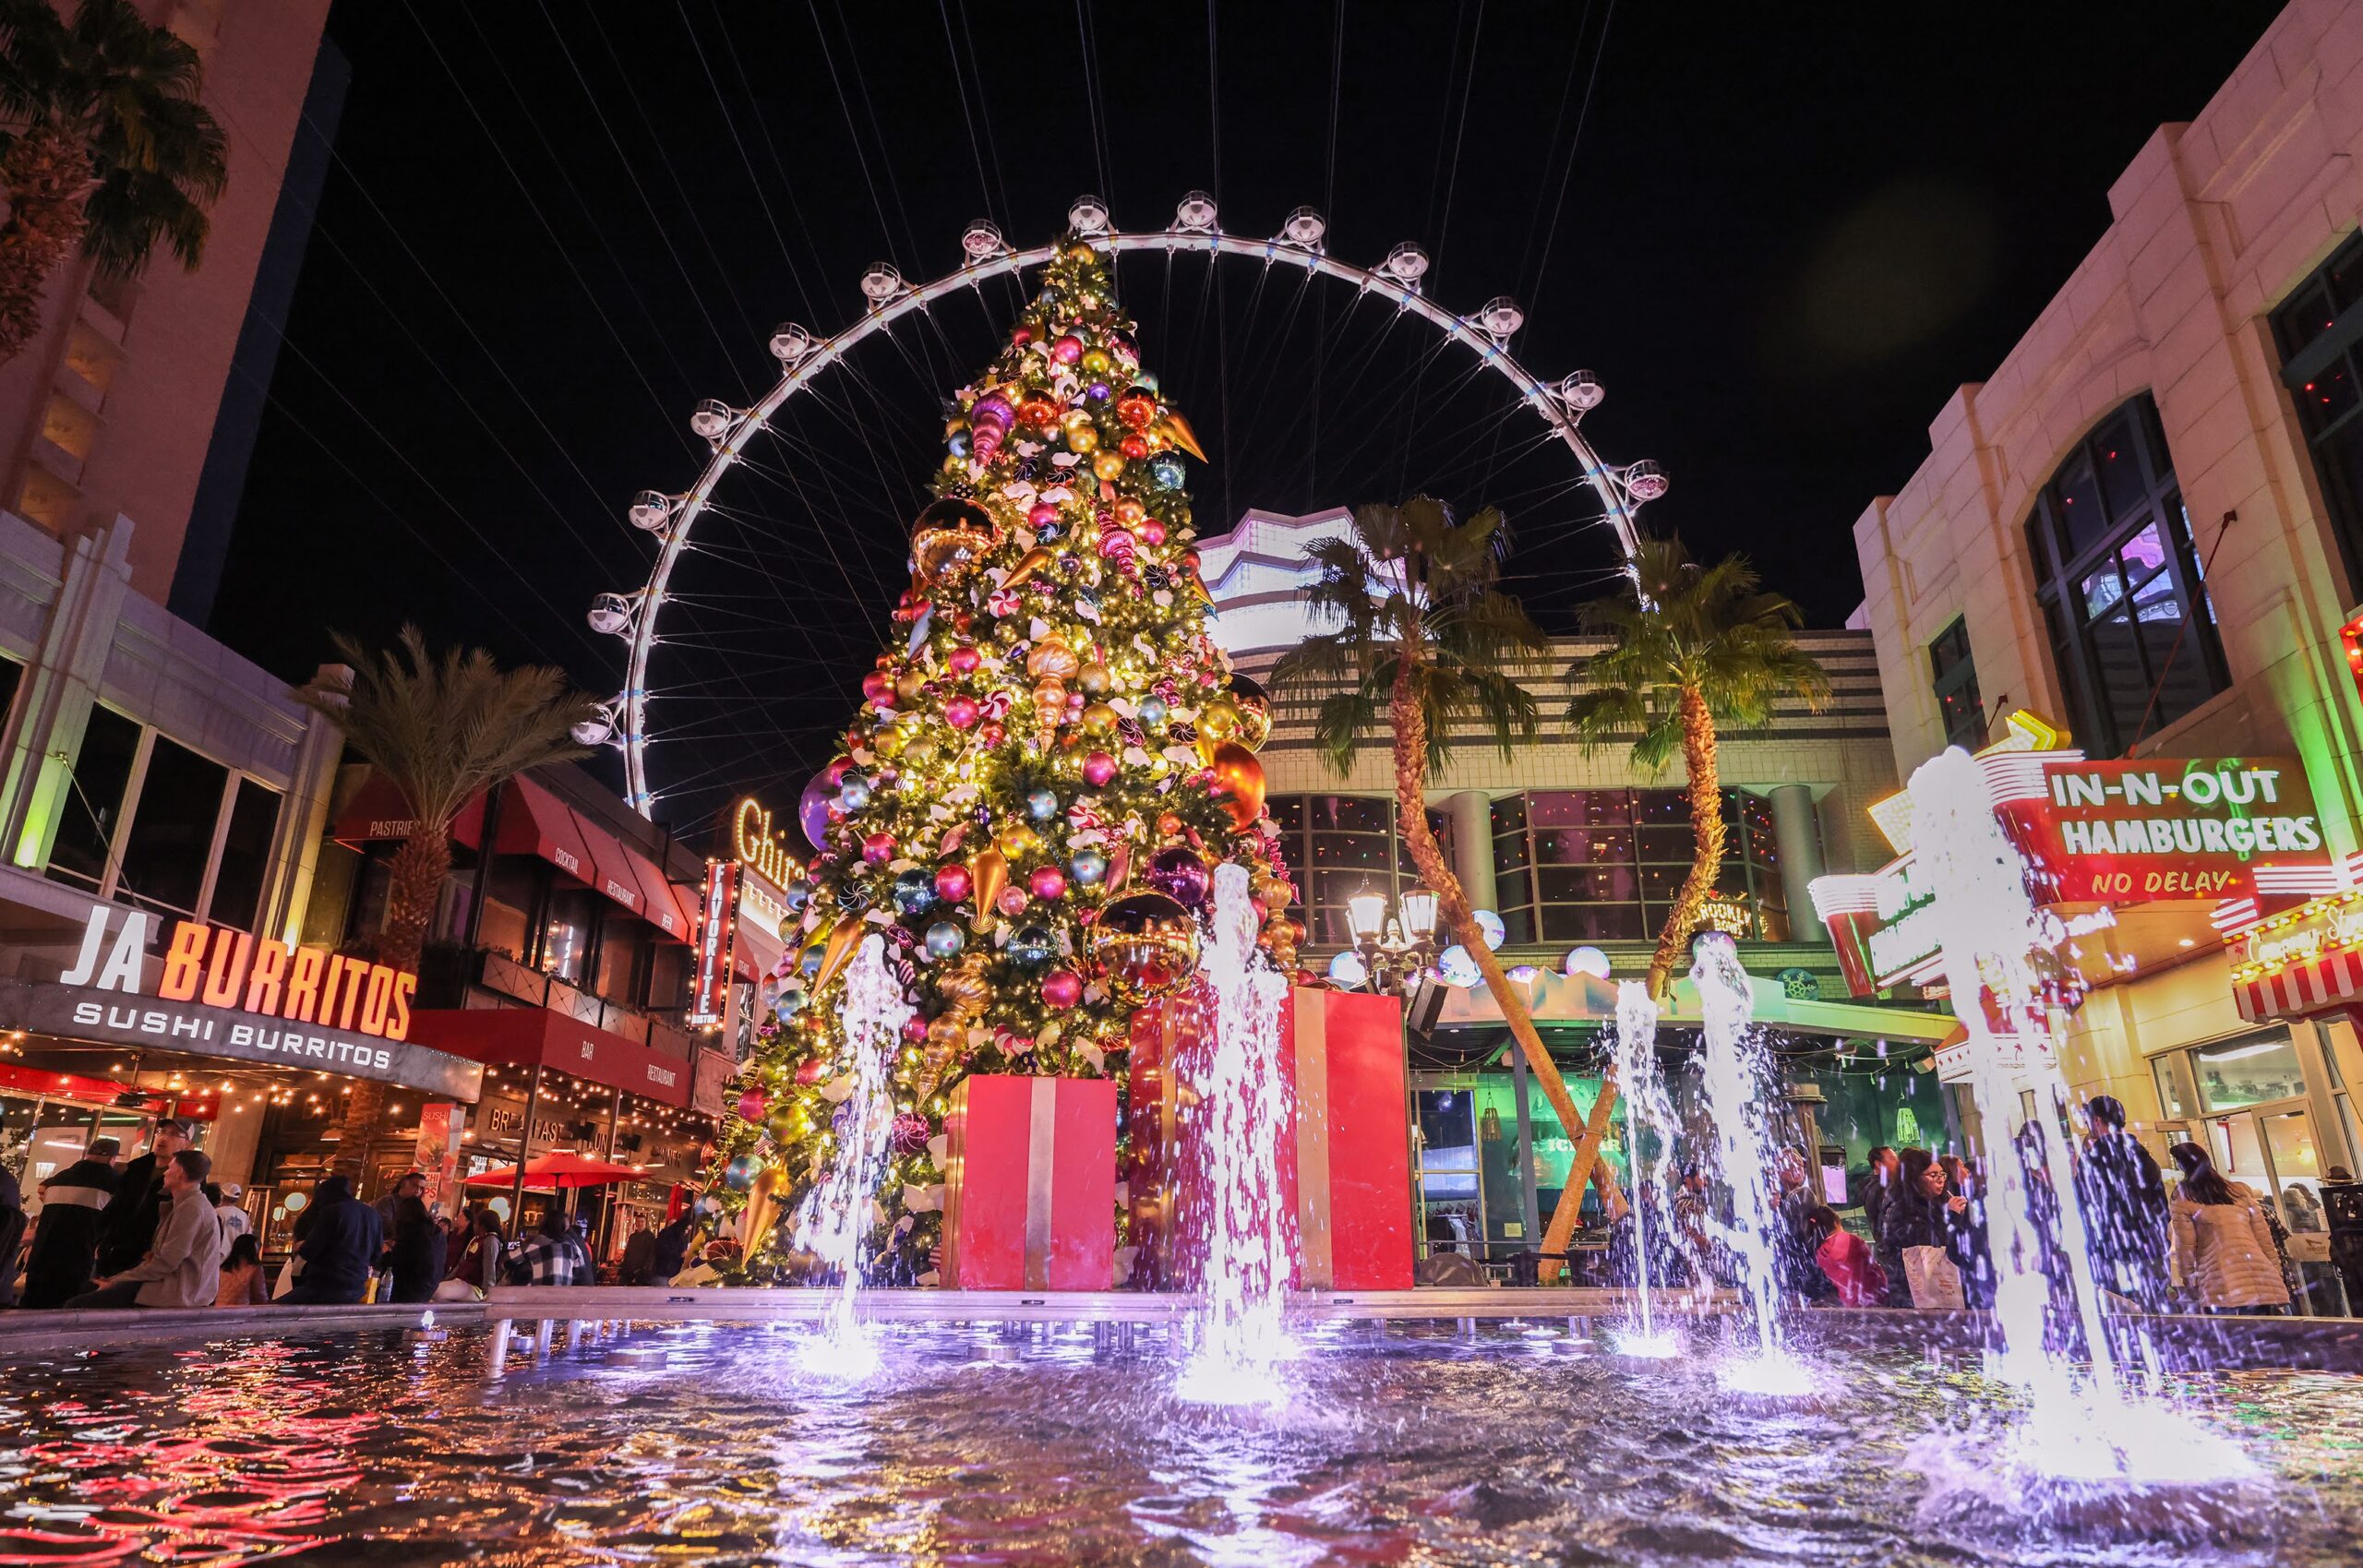 PHOTOS 'Tis the season for holiday cheer on the Las Vegas Strip The